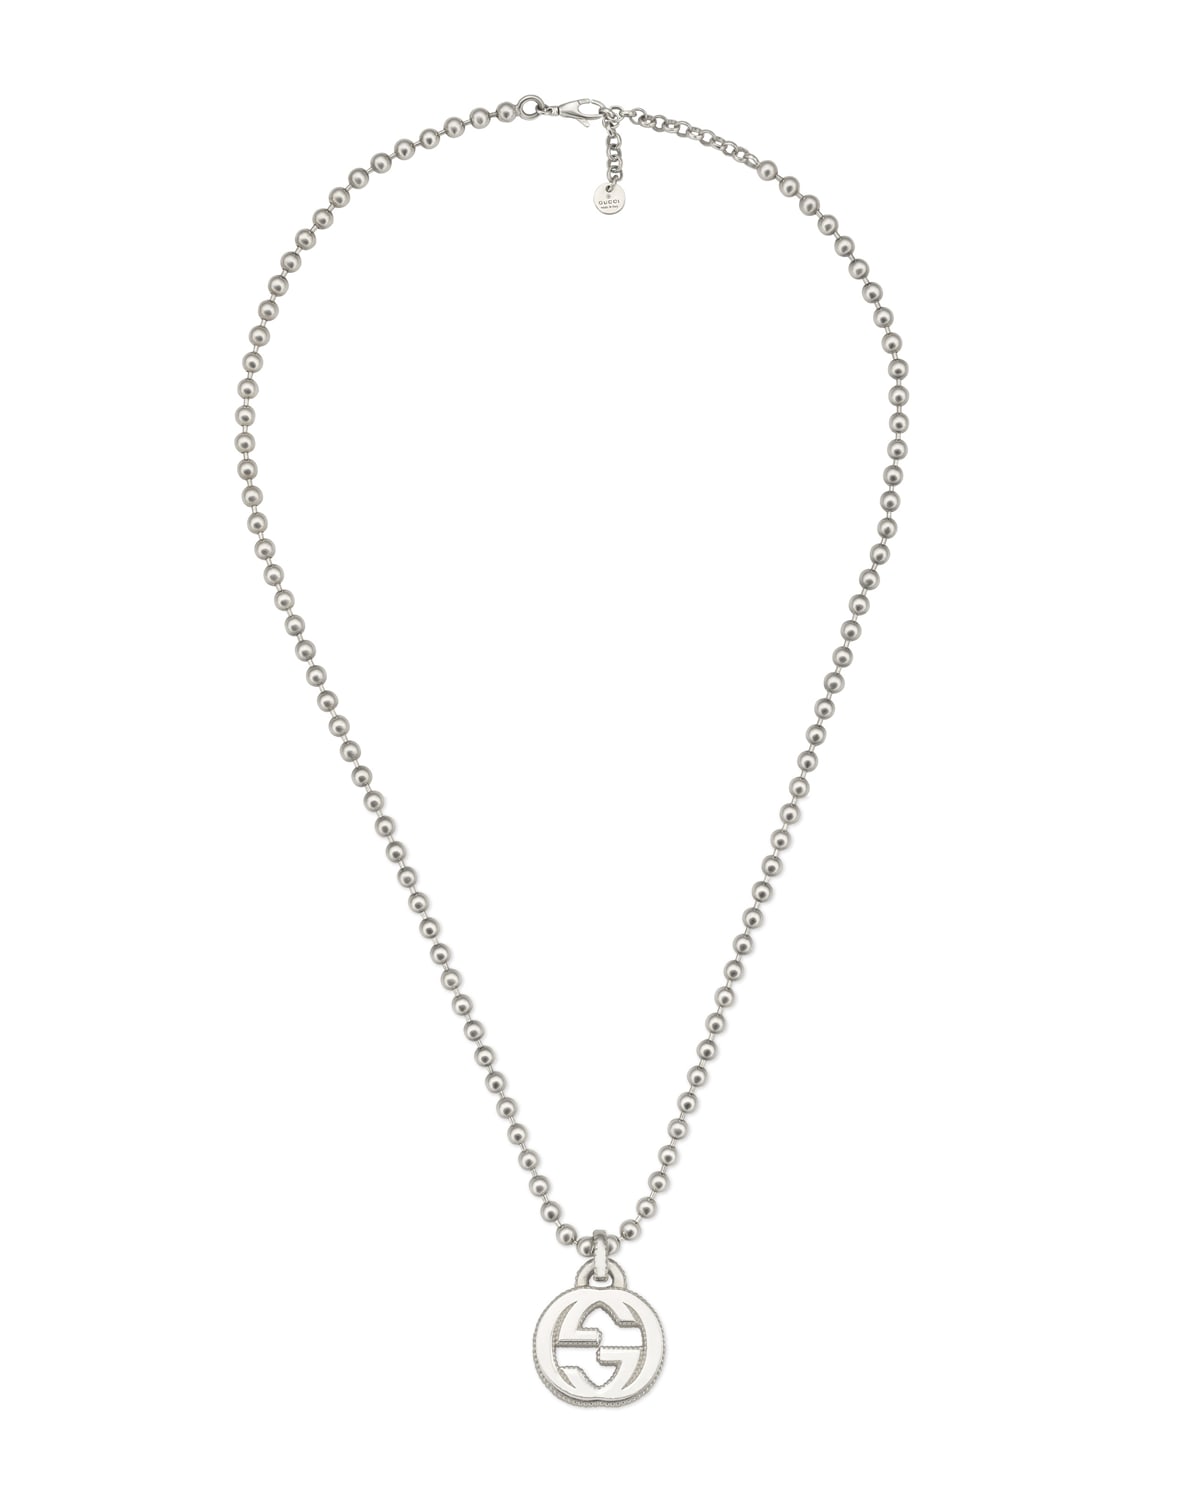 Gucci Men's GucciGhost Pendant Necklace, Silver - Bergdorf Goodman